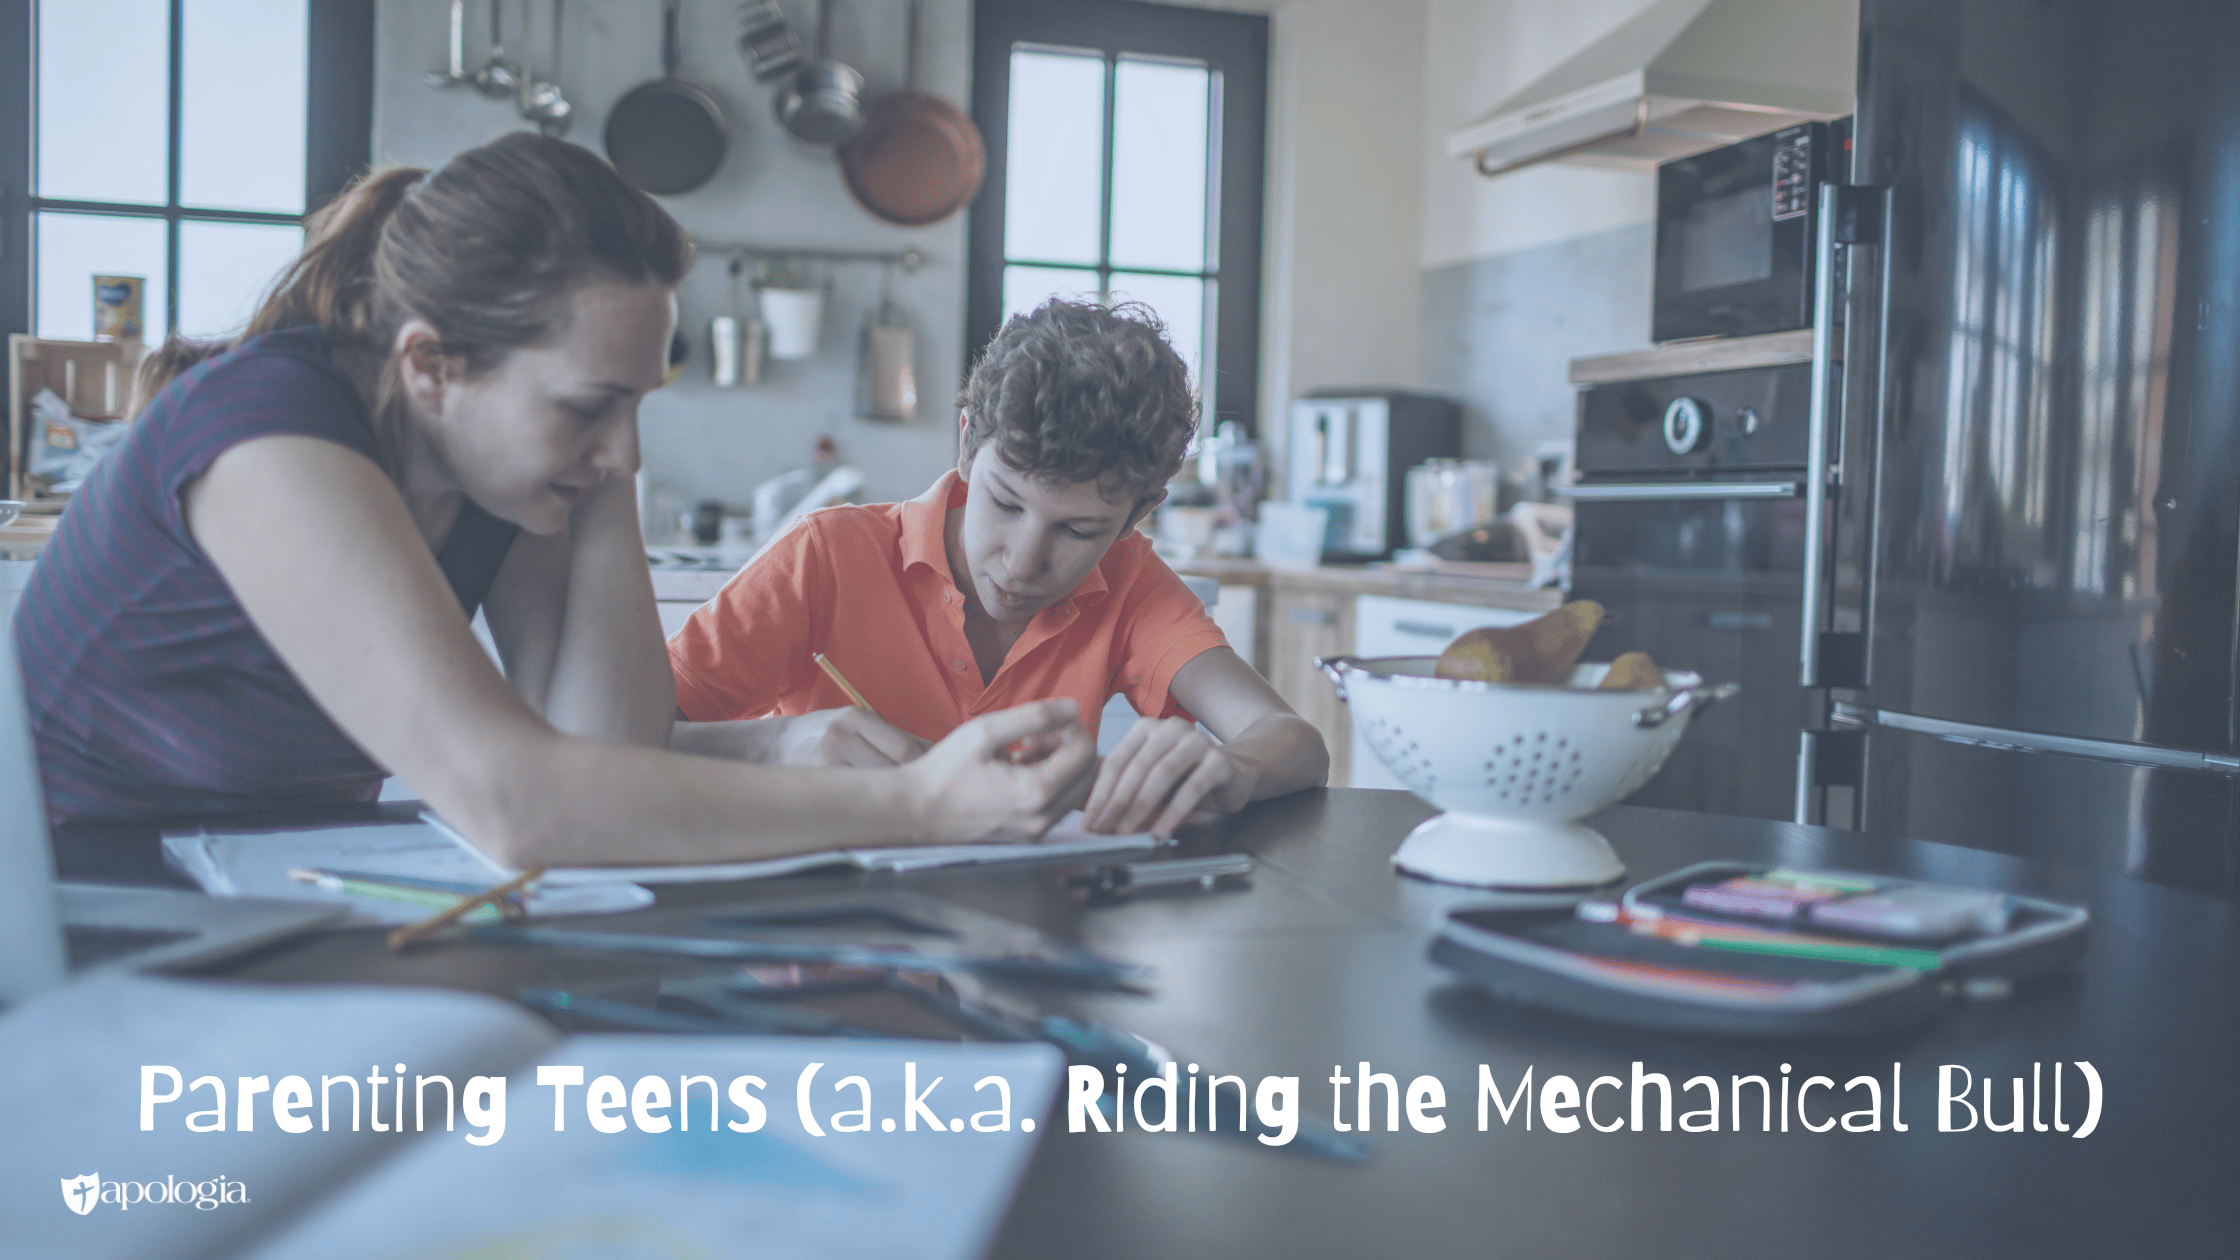 Parenting Teens (a.k.a. Riding the Mechanical Bull)